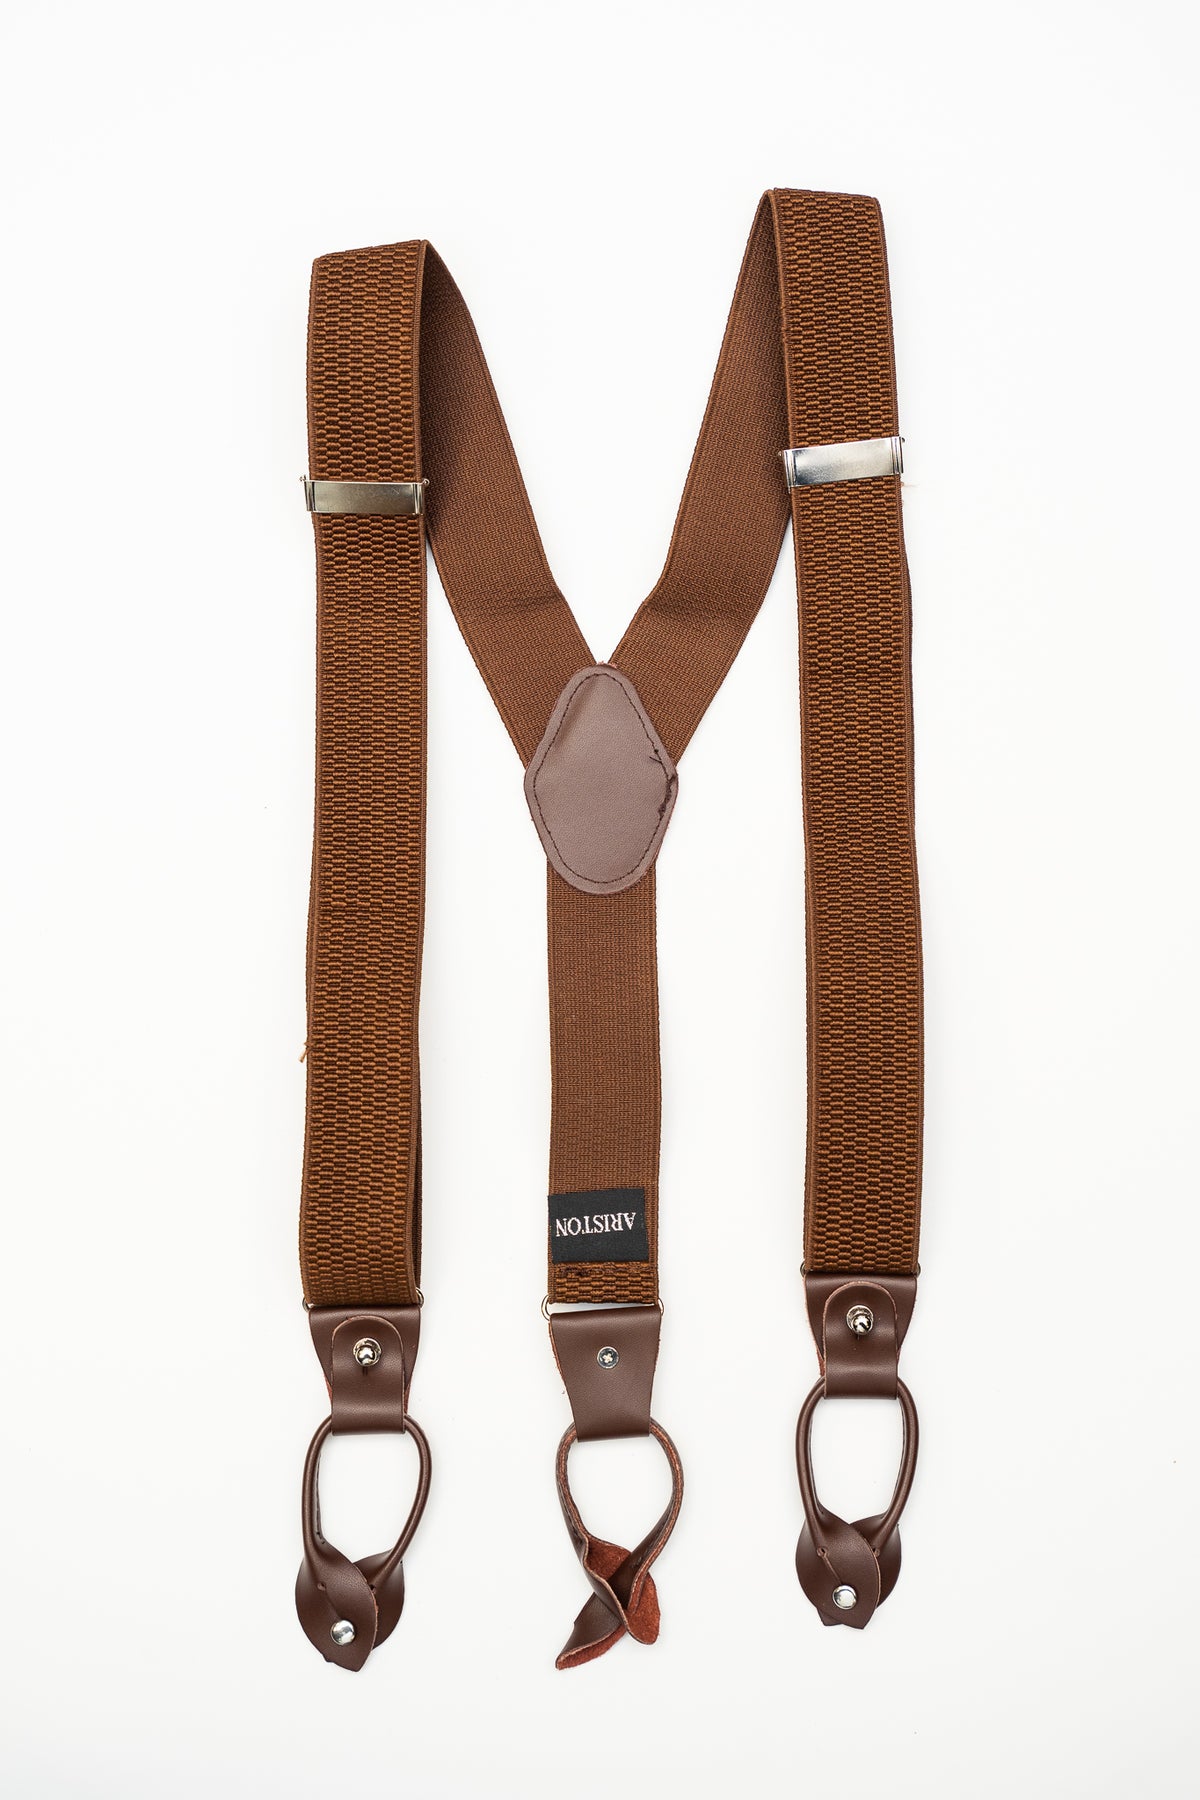 AR Brown Suspenders - The Suit Depot